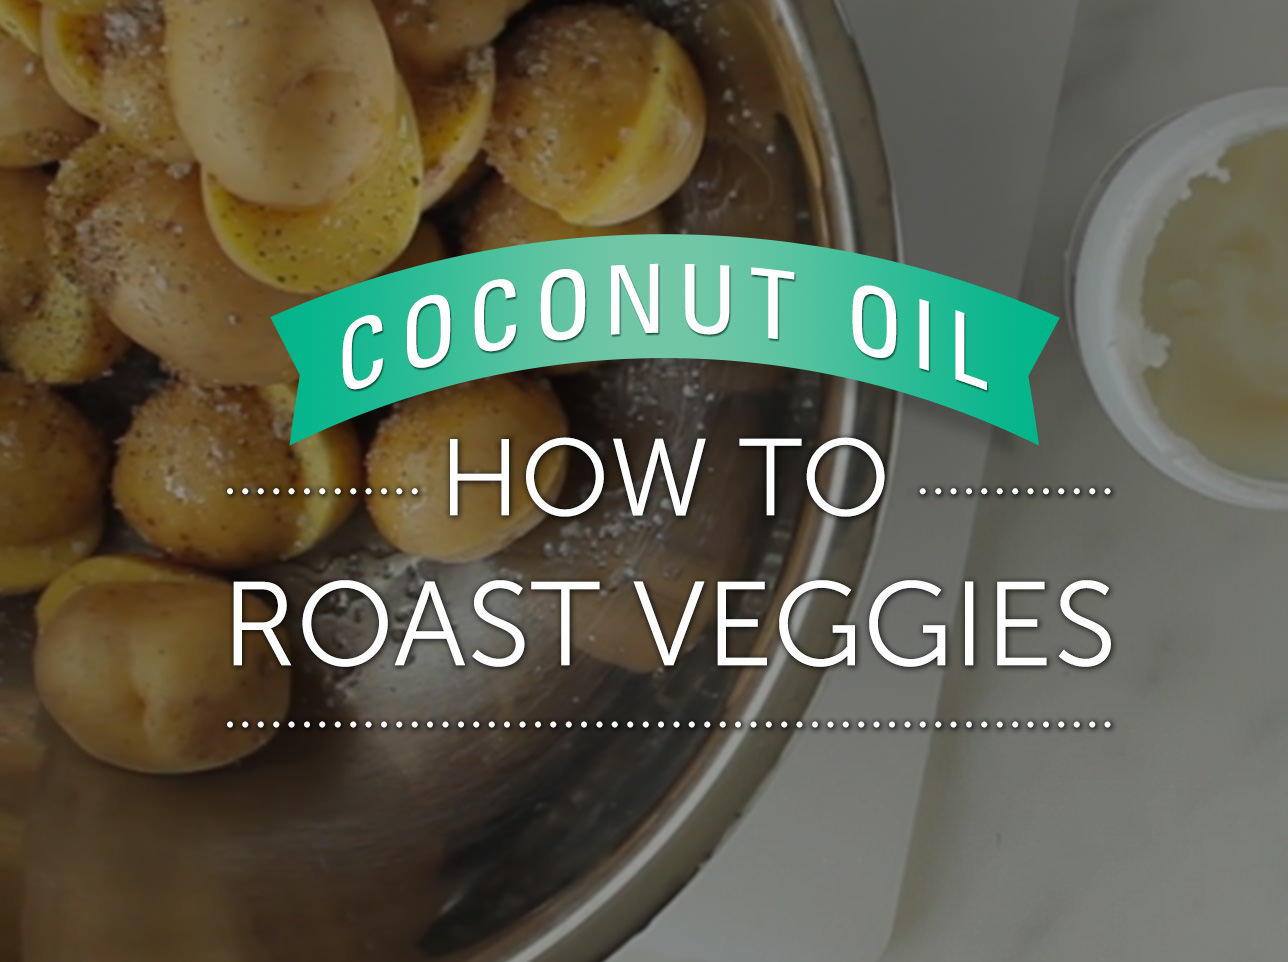 Learn how to roast veggies with LouAna Coconut Oil.